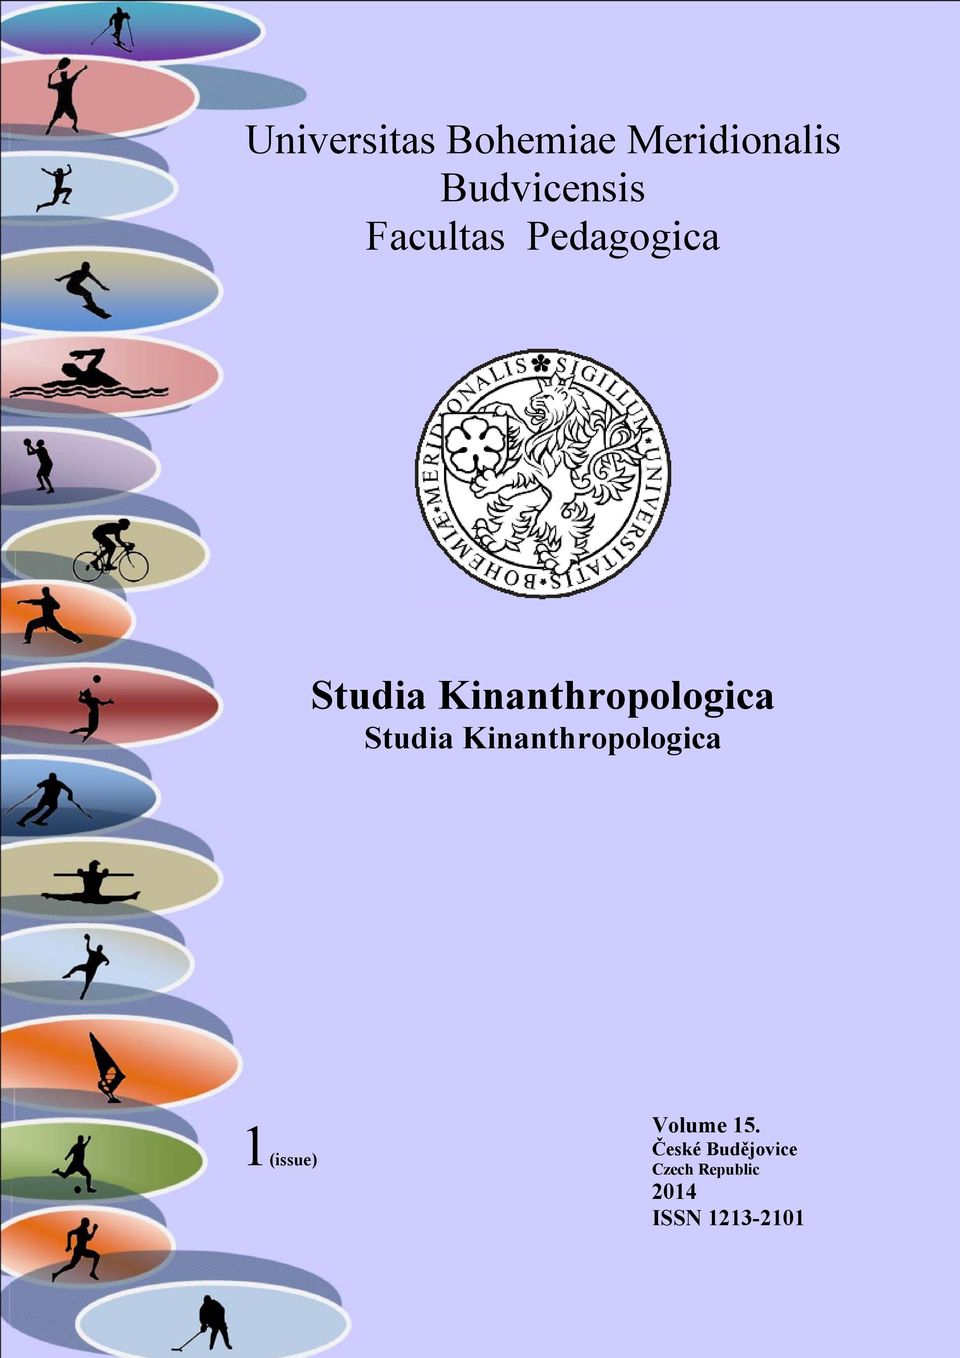 Studia Kinanthropologica 1(issue) Volume 15.